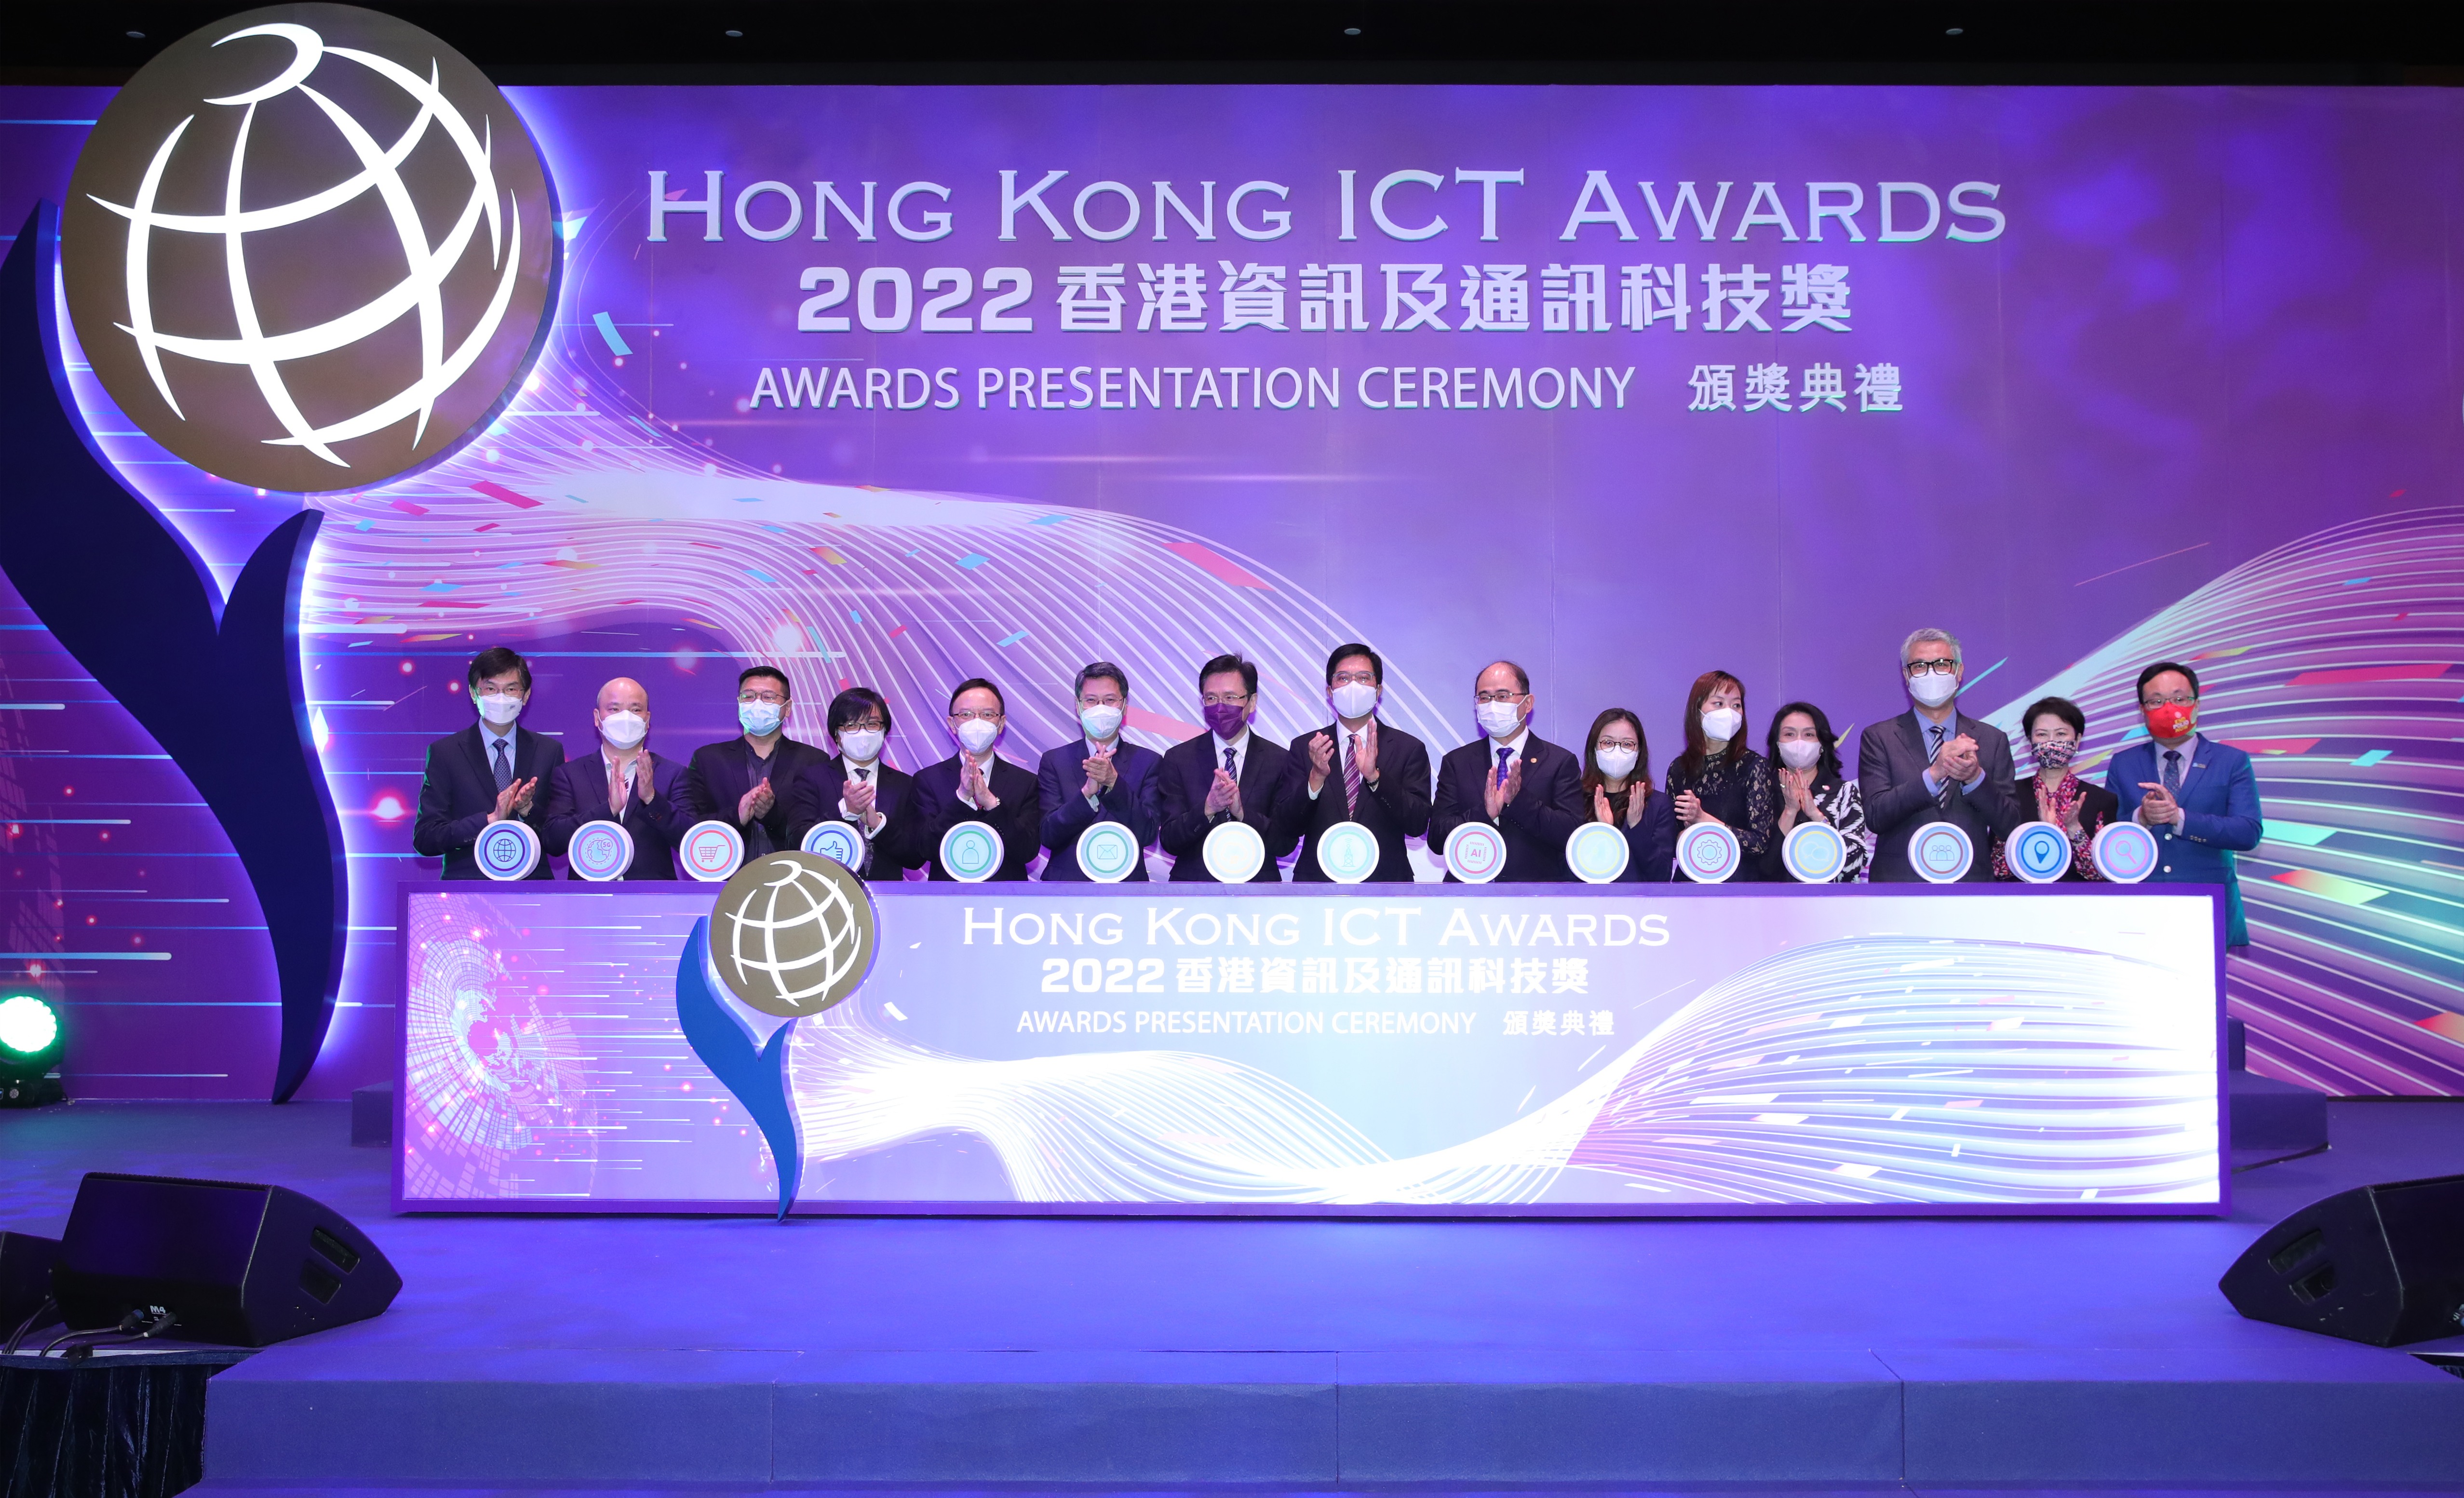 Hong Kong ICT Awards 2022 Awards Presentation Ceremony Kick-off Ceremony (after)